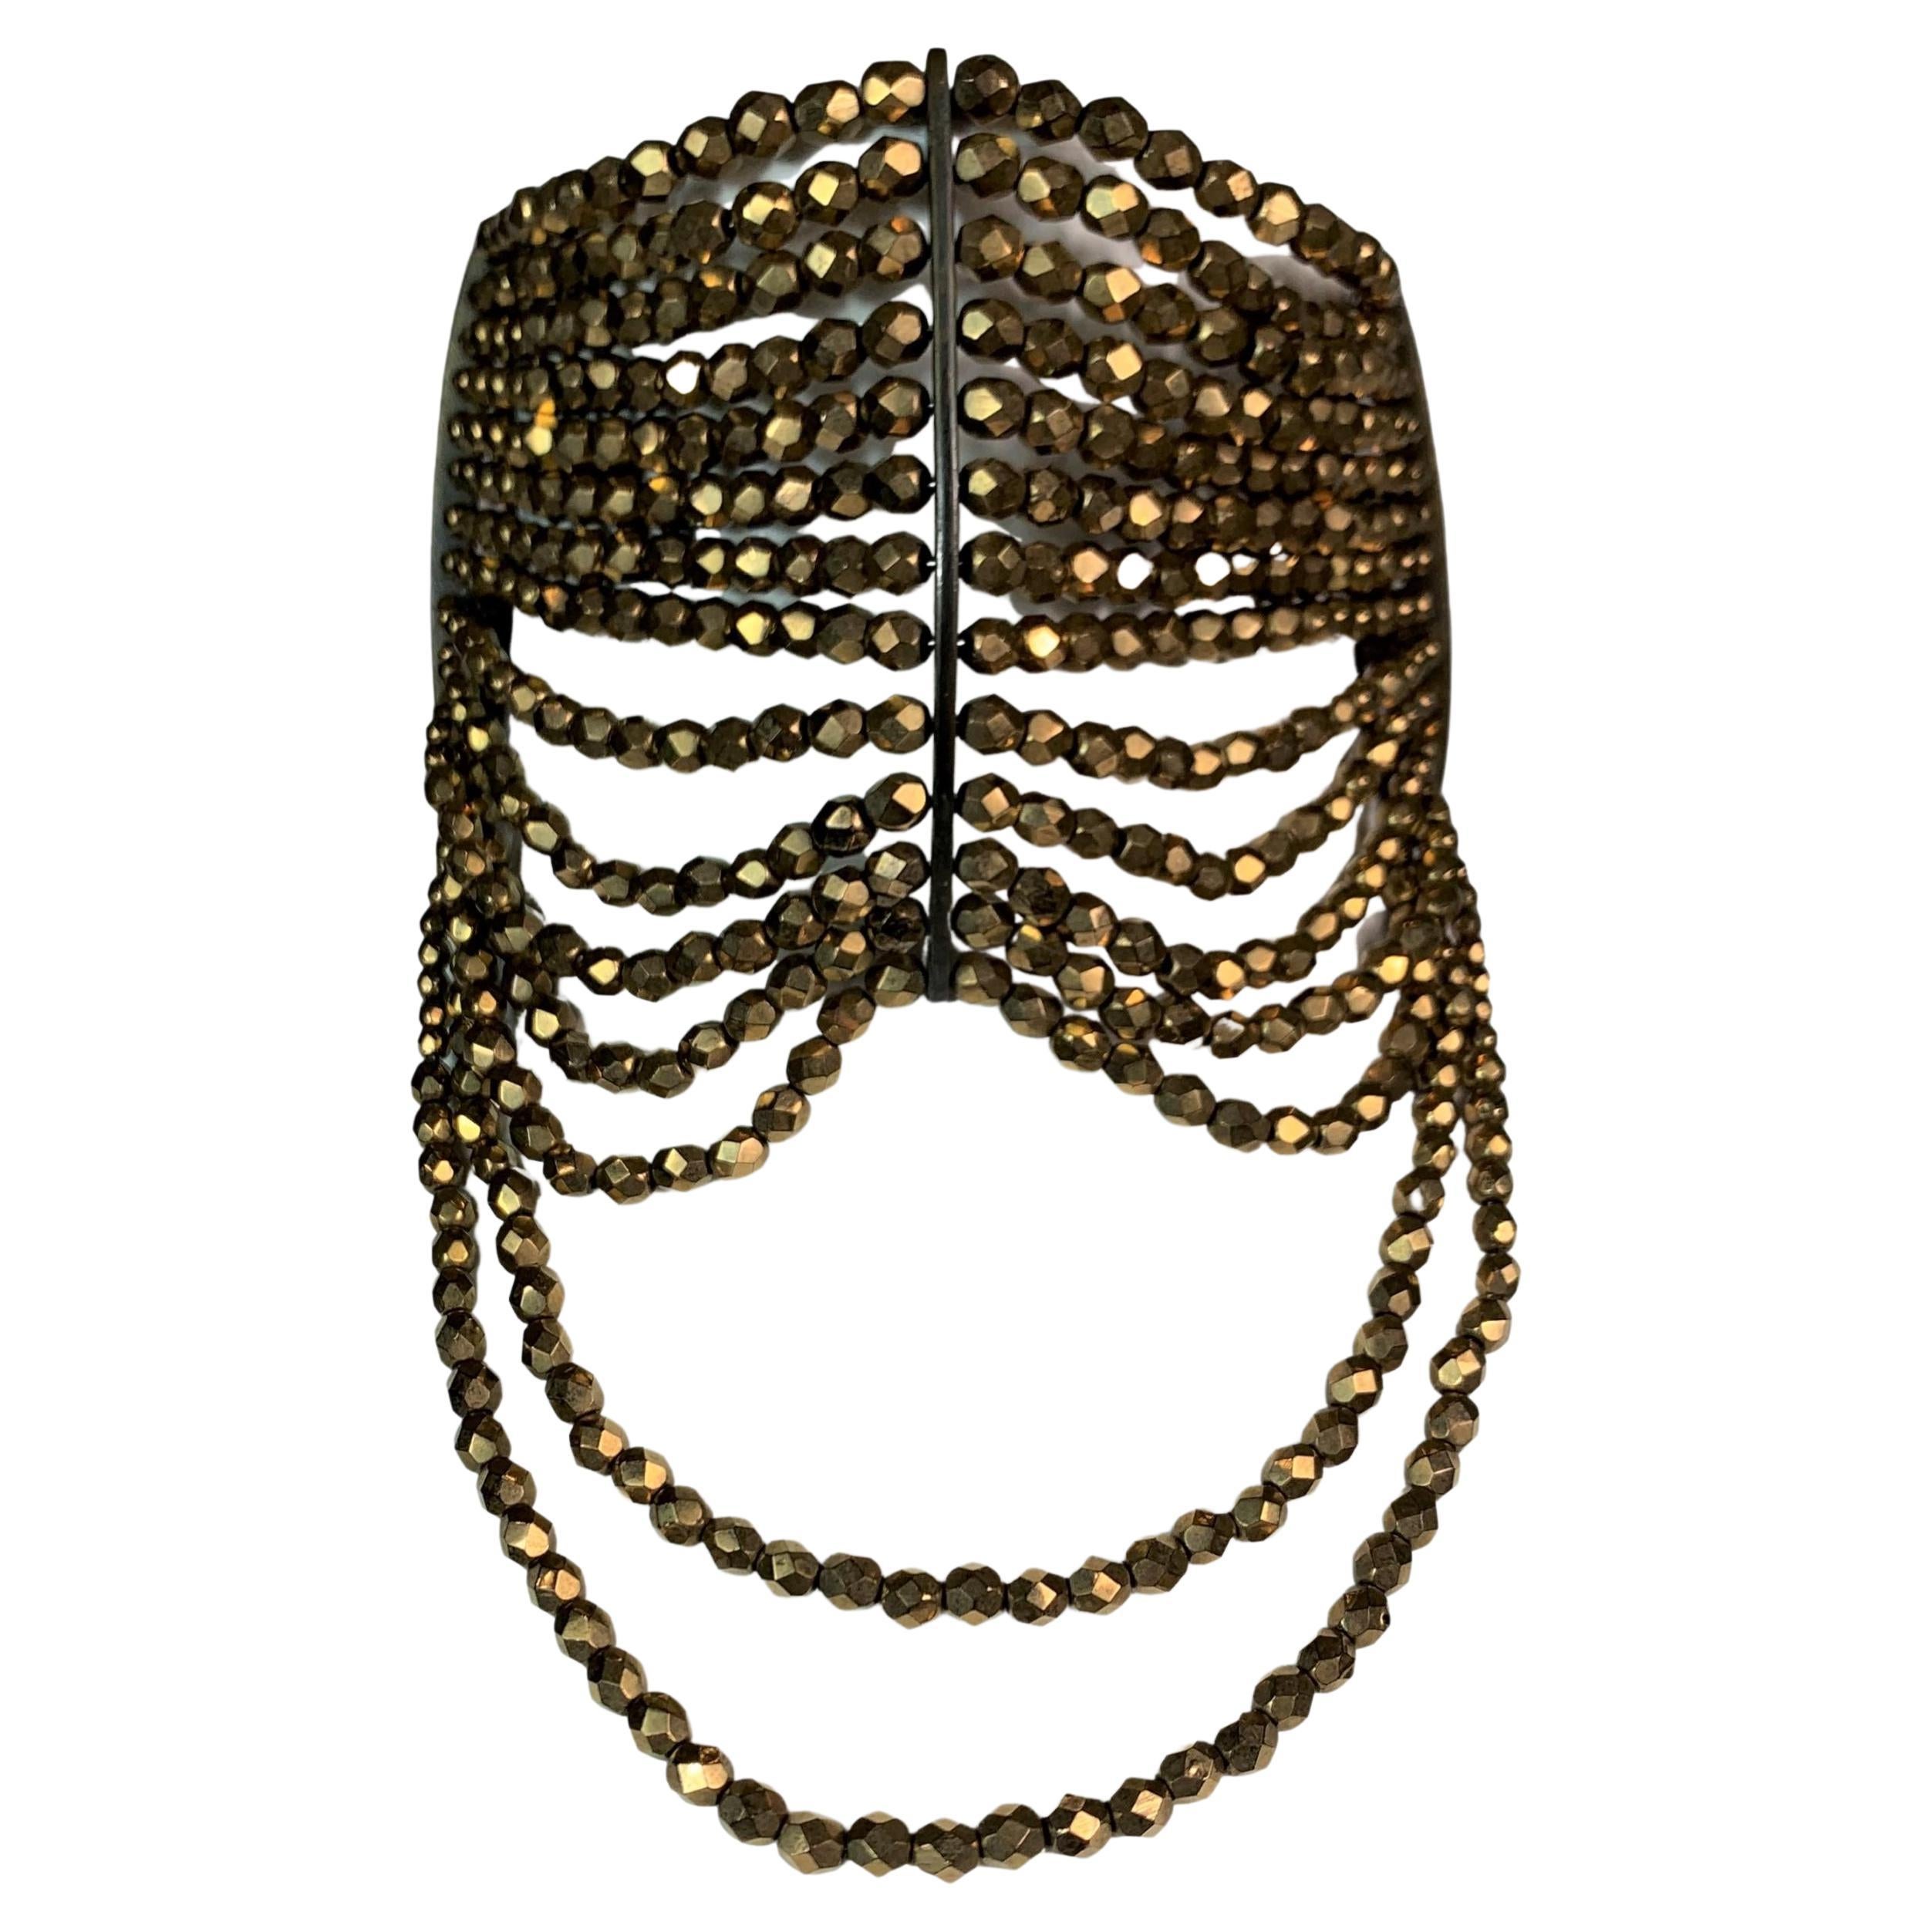 S/S 1999 Christian Dior by John Galliano Masai Large Gold Choker Necklace